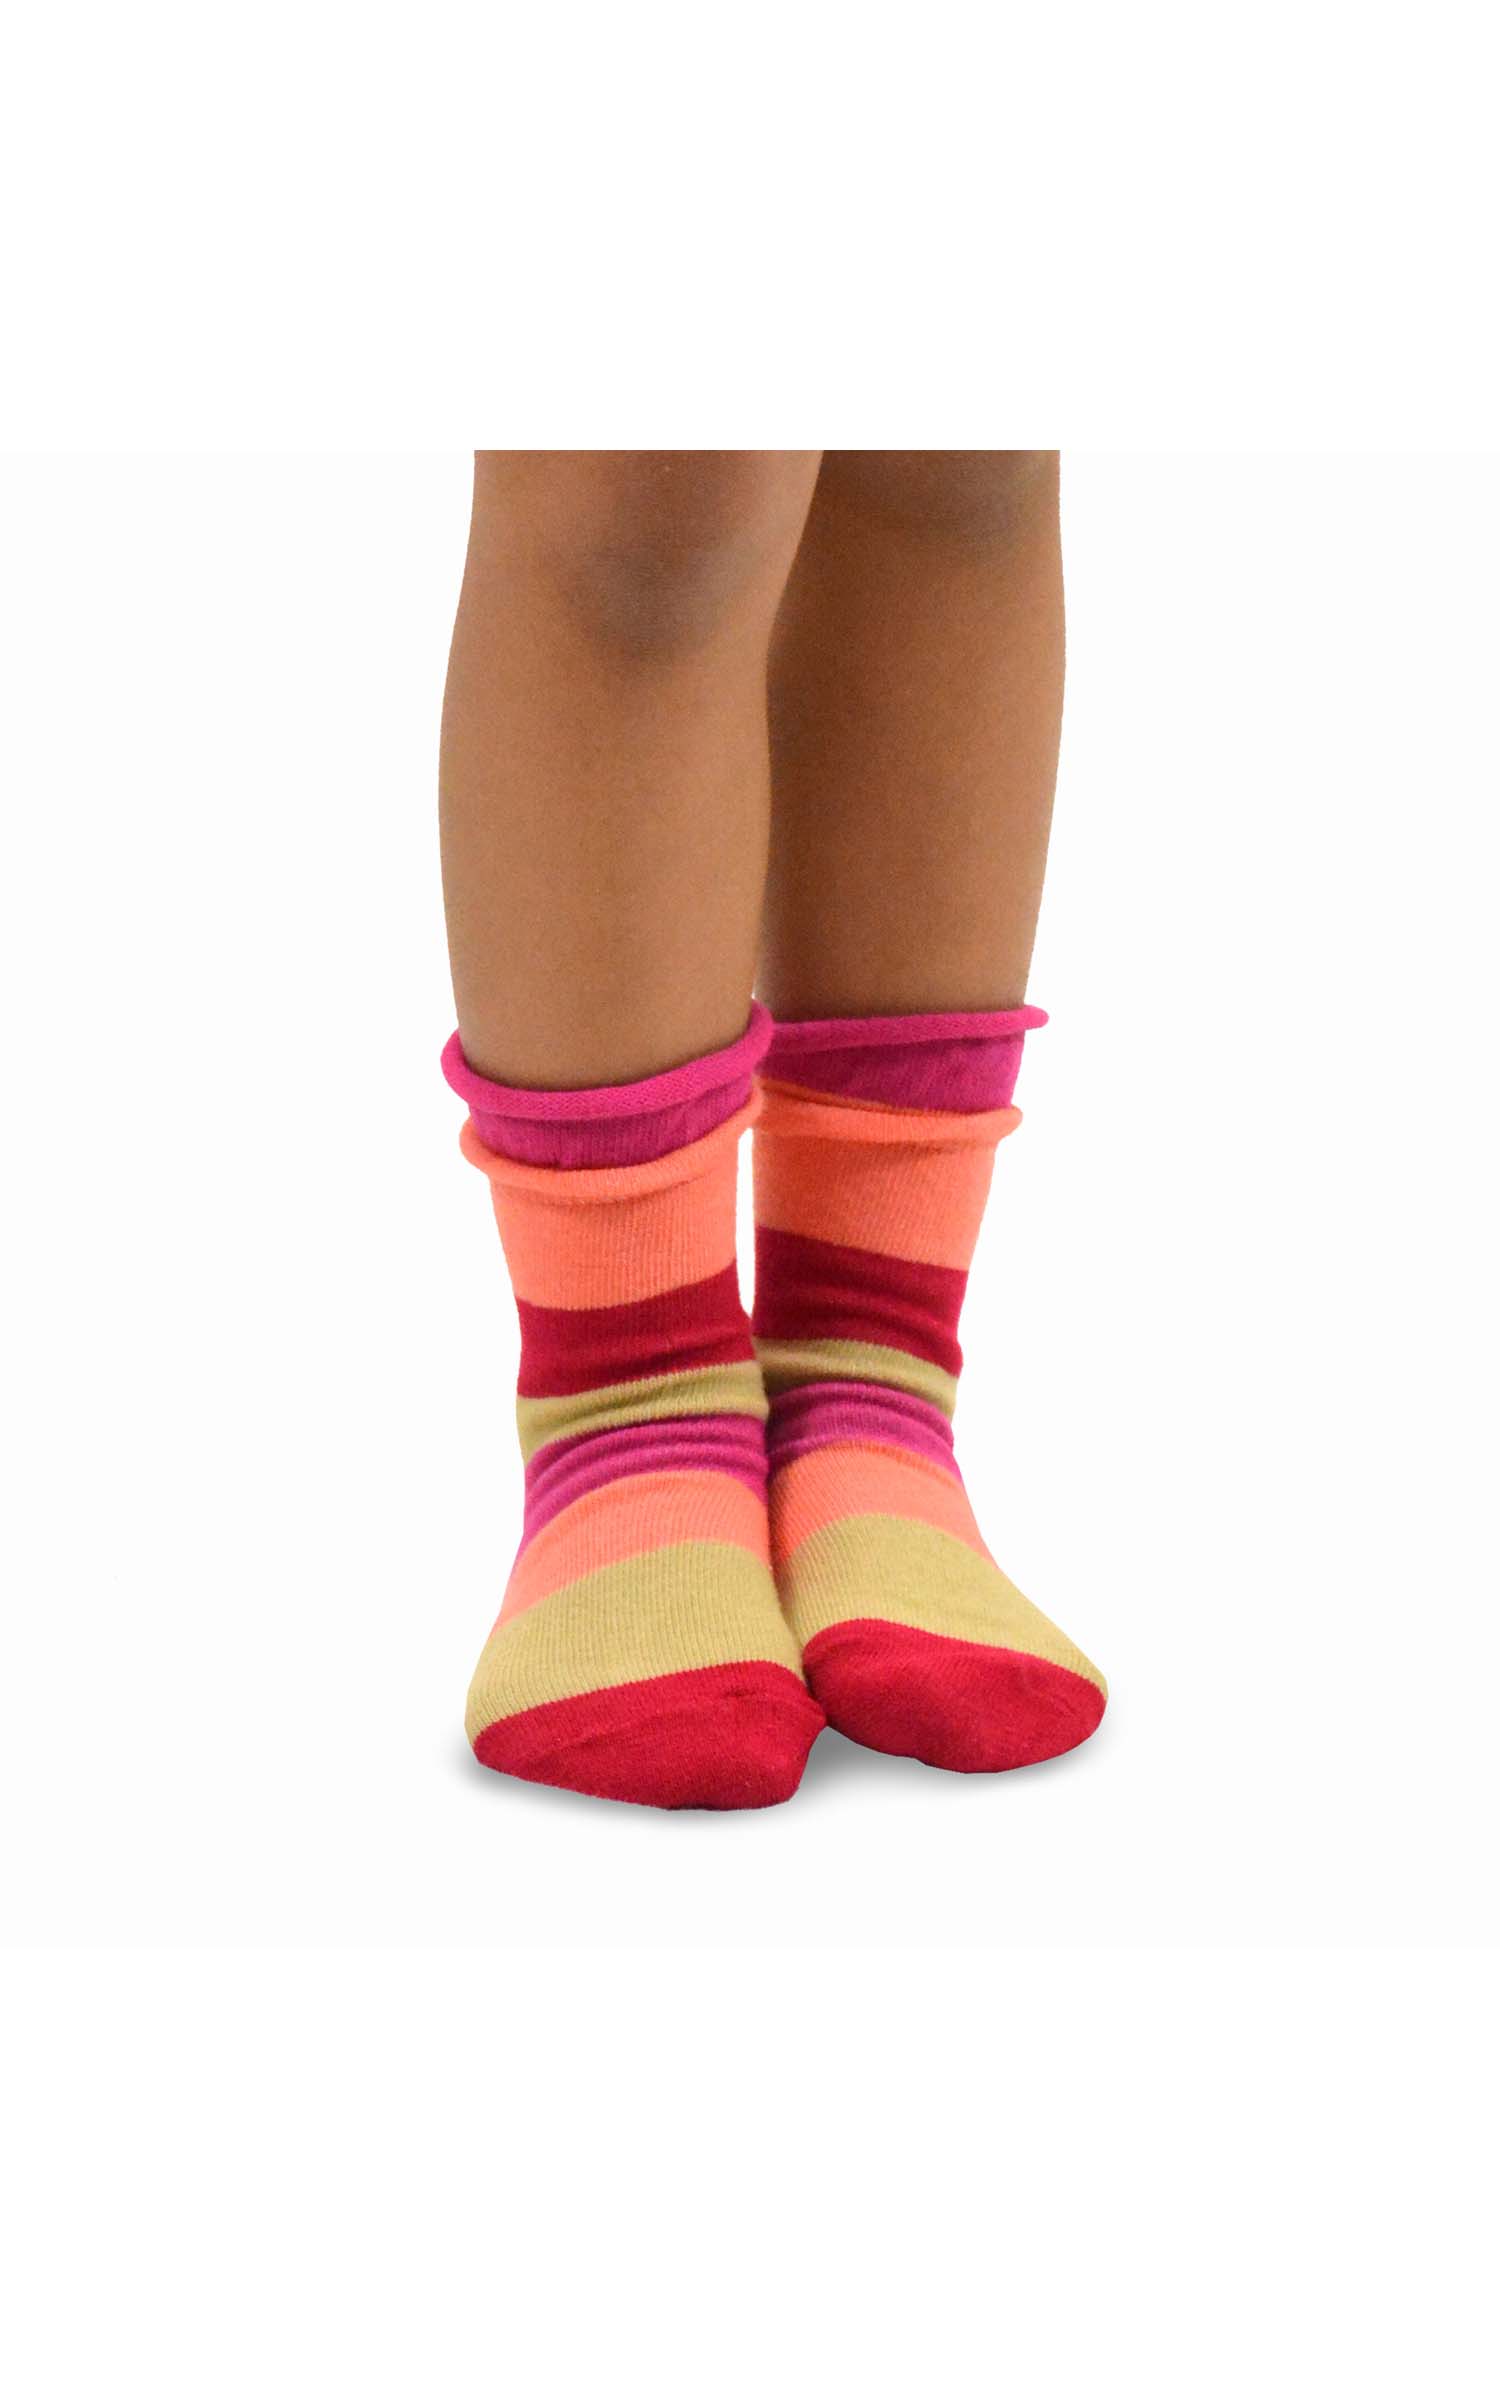 TeeHee Little Kids Girls Cotton Crew Basic Roll Top Socks 6 Pair Pack (9-10 Years, Indian Stripe) - image 5 of 7